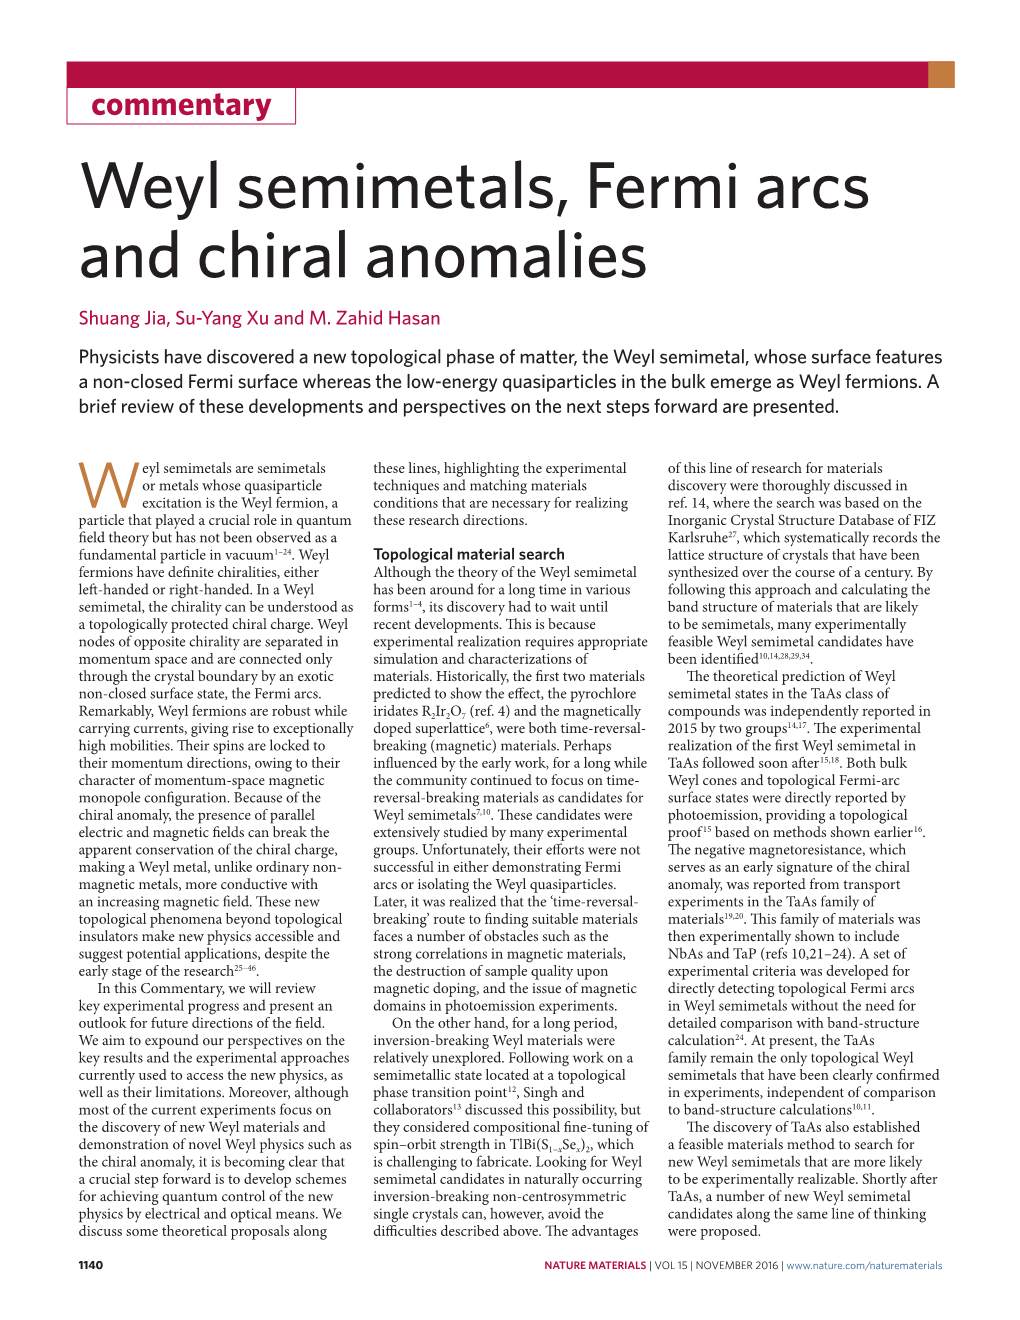 Weyl Semimetals, Fermi Arcs and Chiral Anomalies Shuang Jia, Su-Yang Xu and M